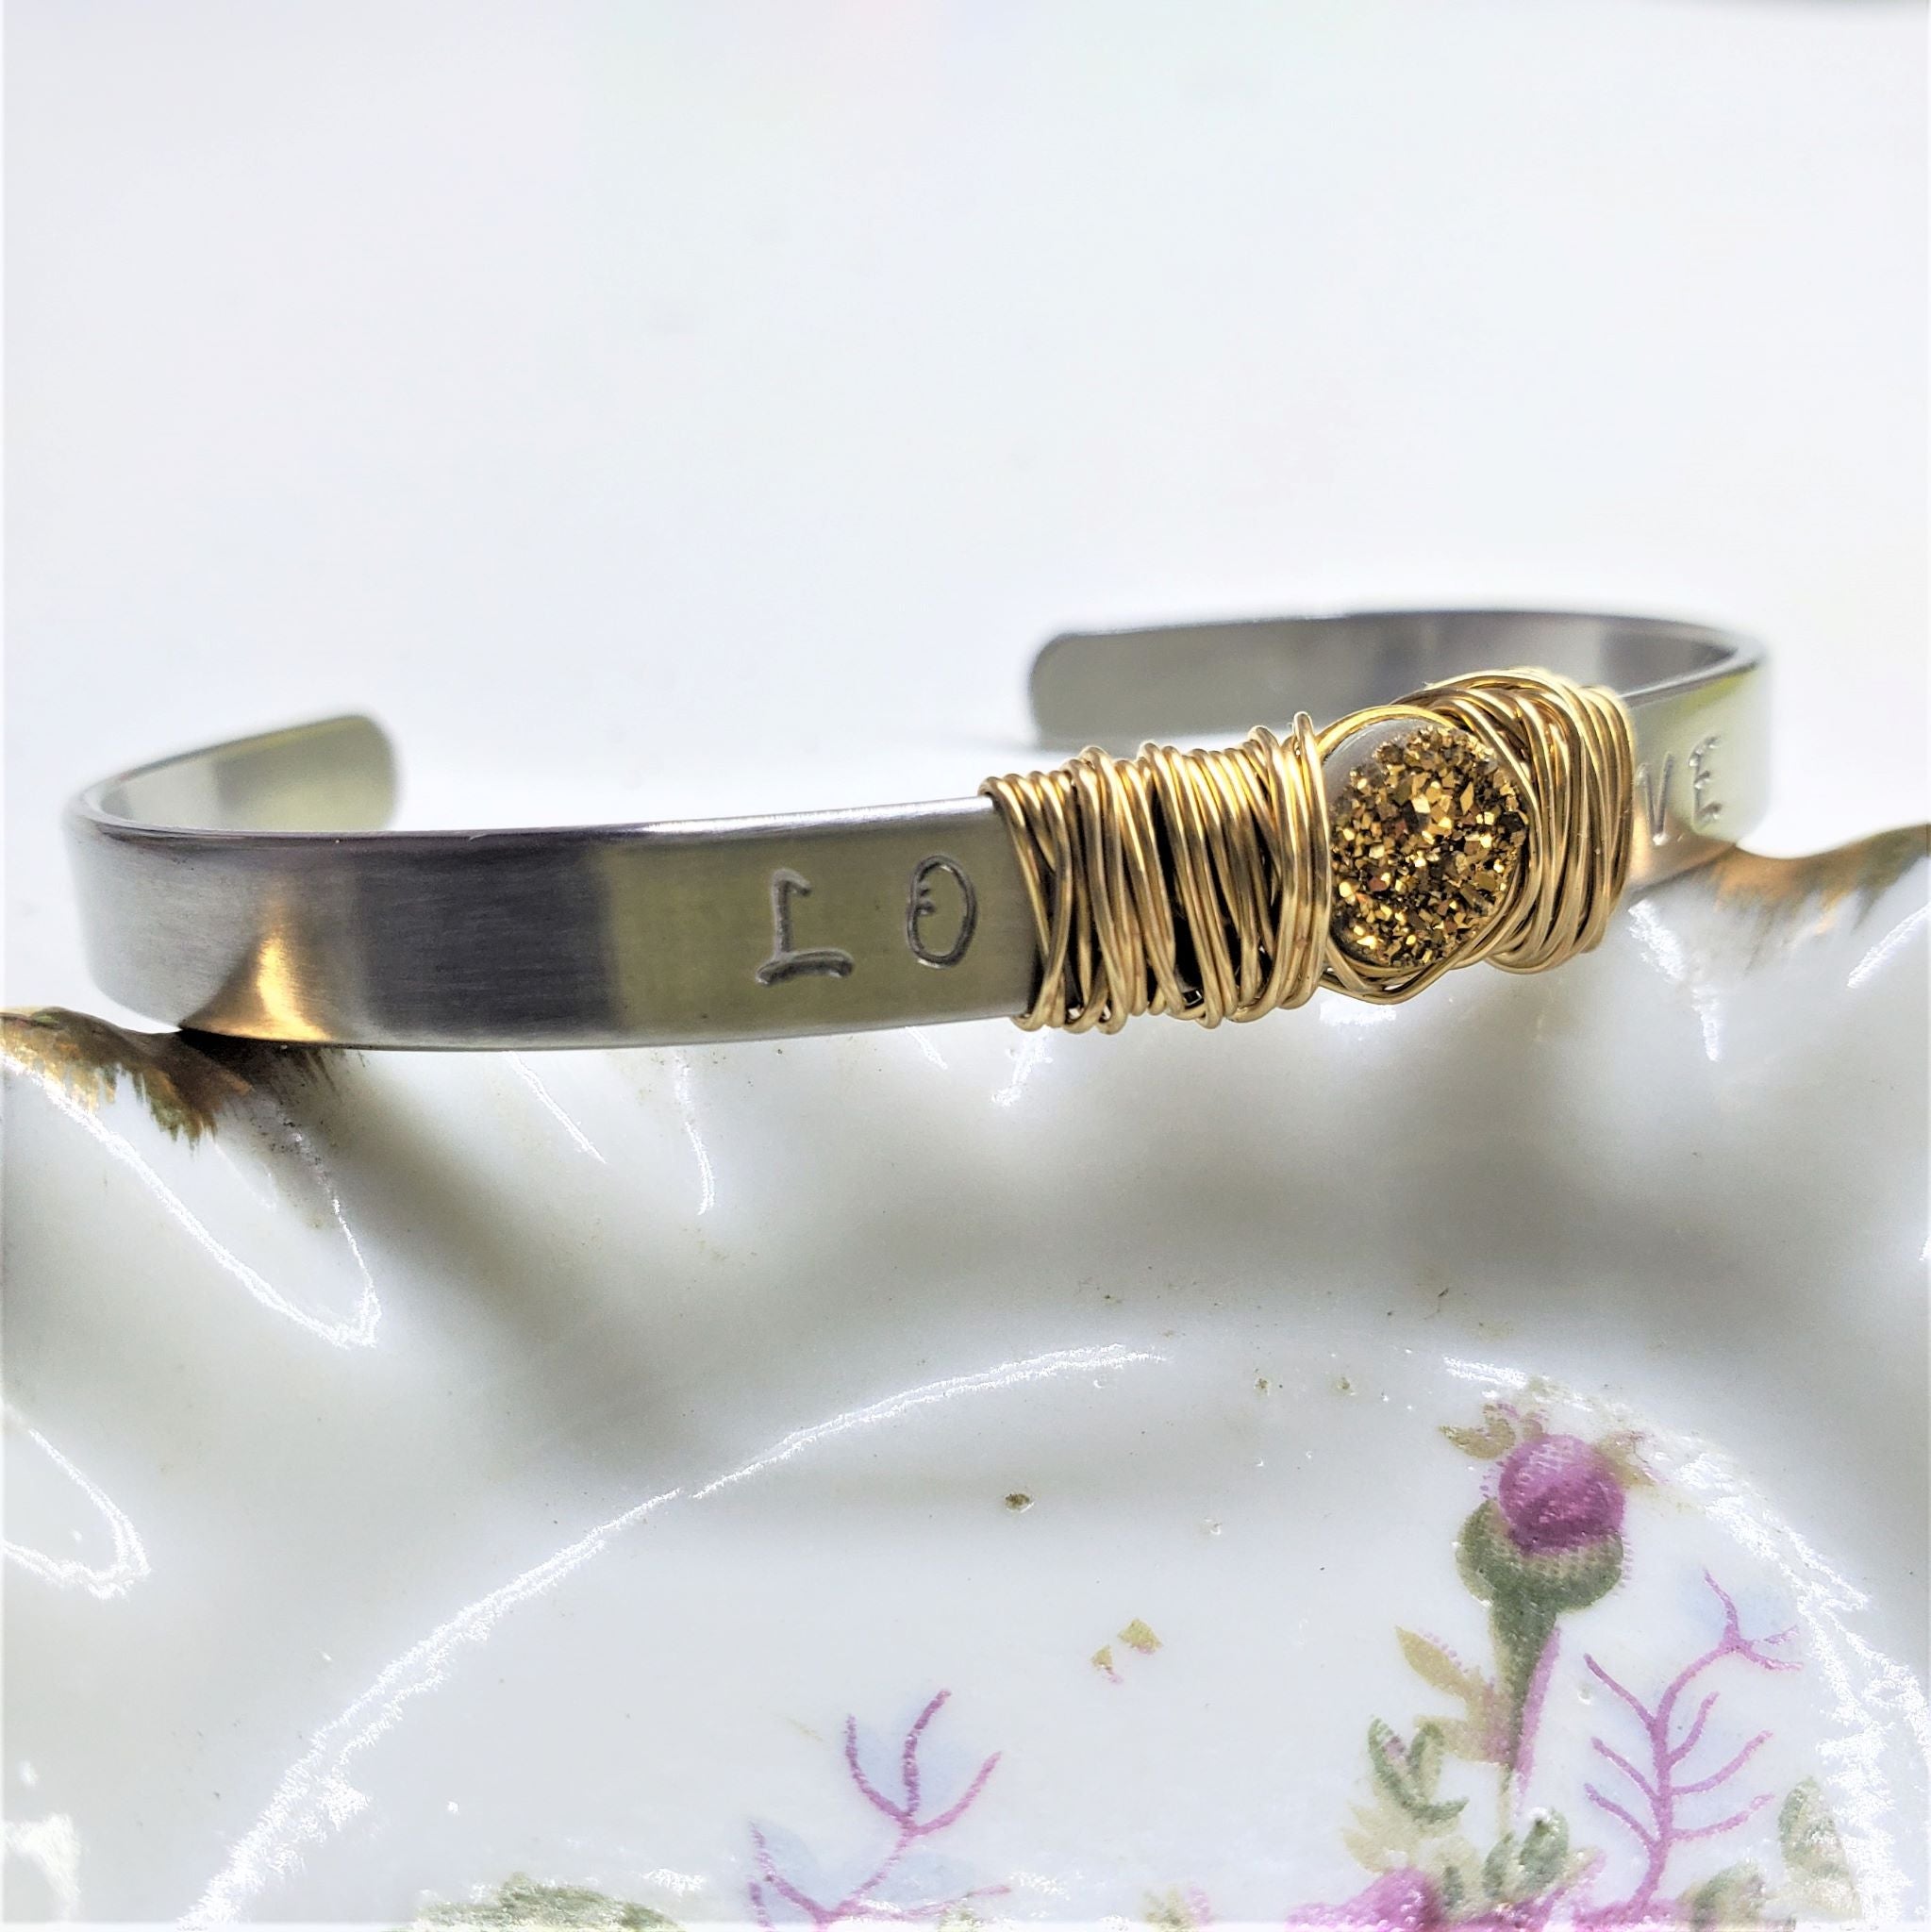 Shop arricraft 16 Pcs Brass Pendant Bails for Jewelry Making